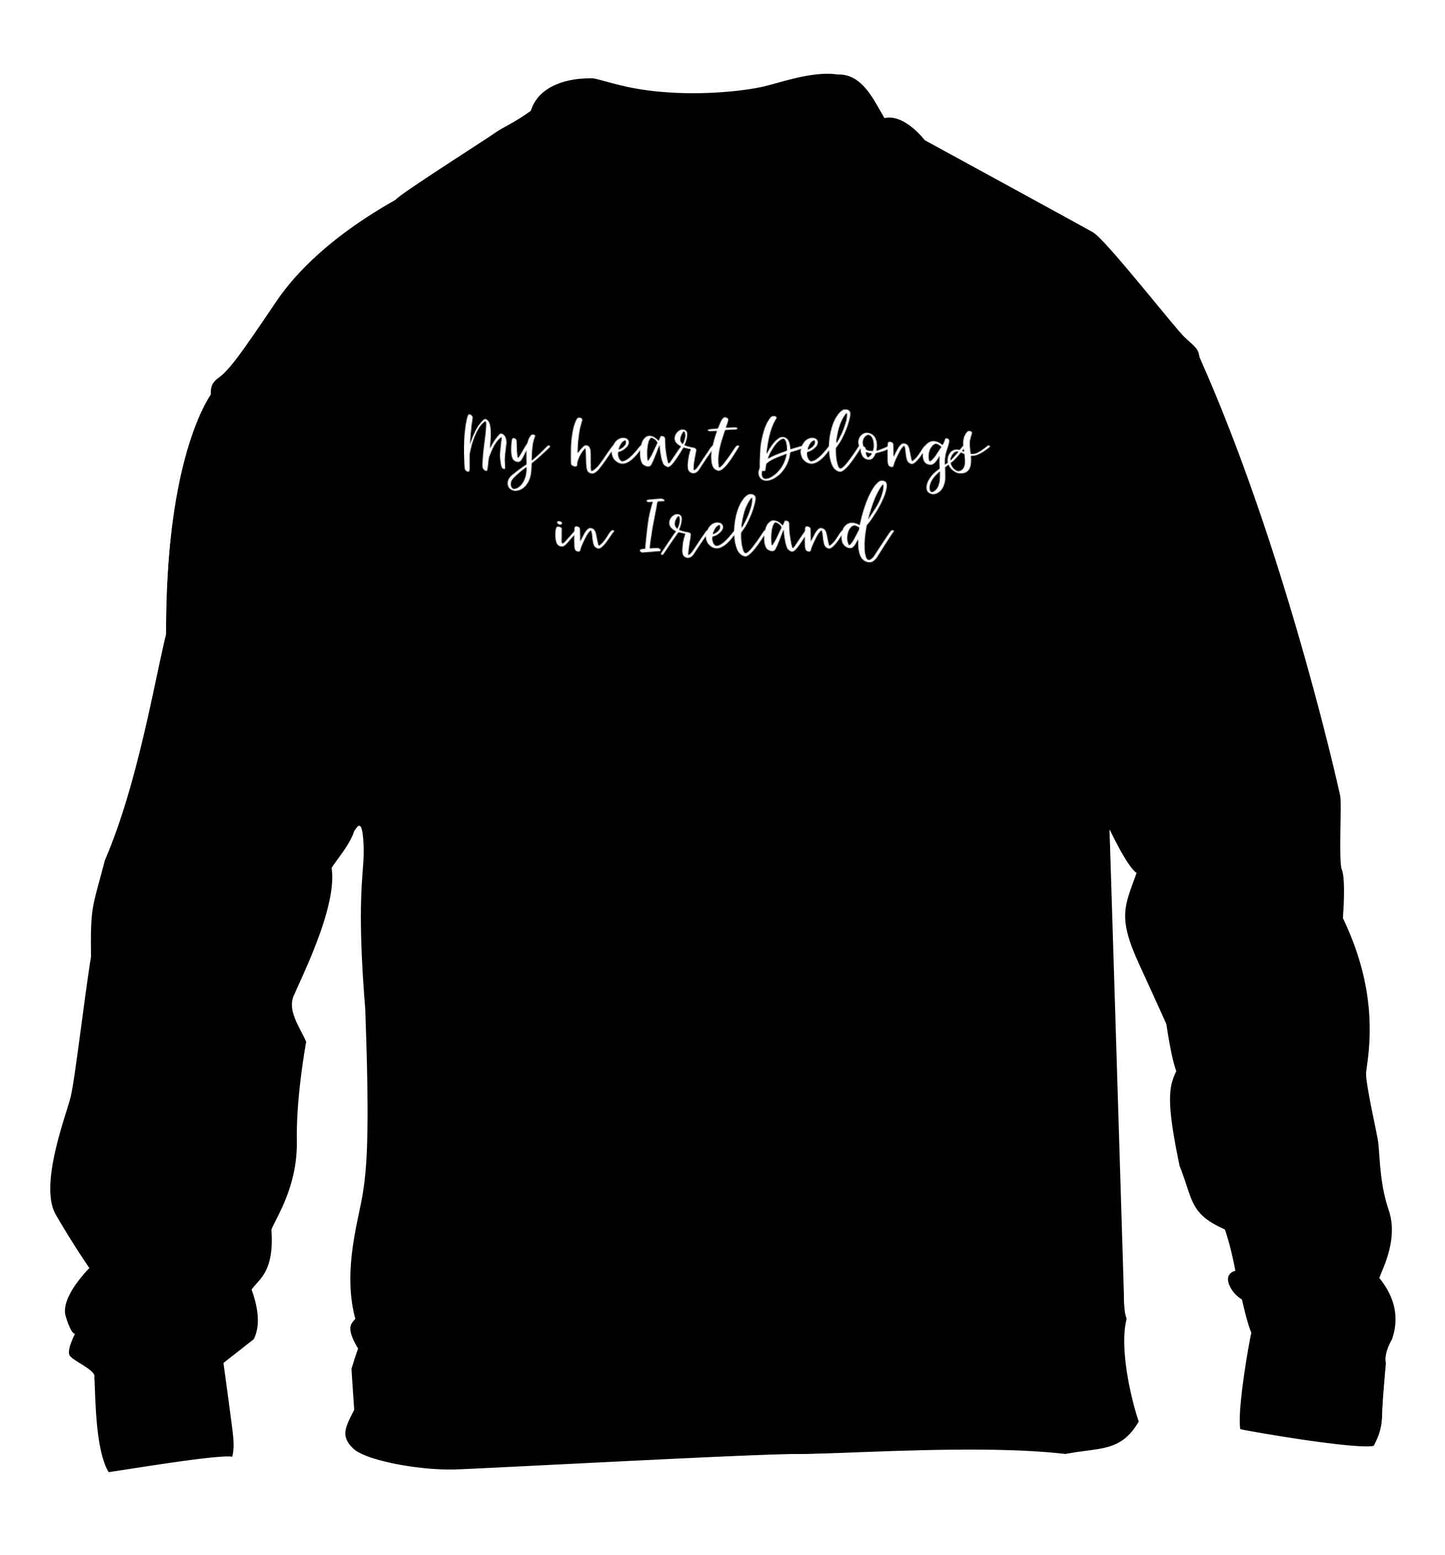 My heart belongs in Ireland children's black sweater 12-13 Years